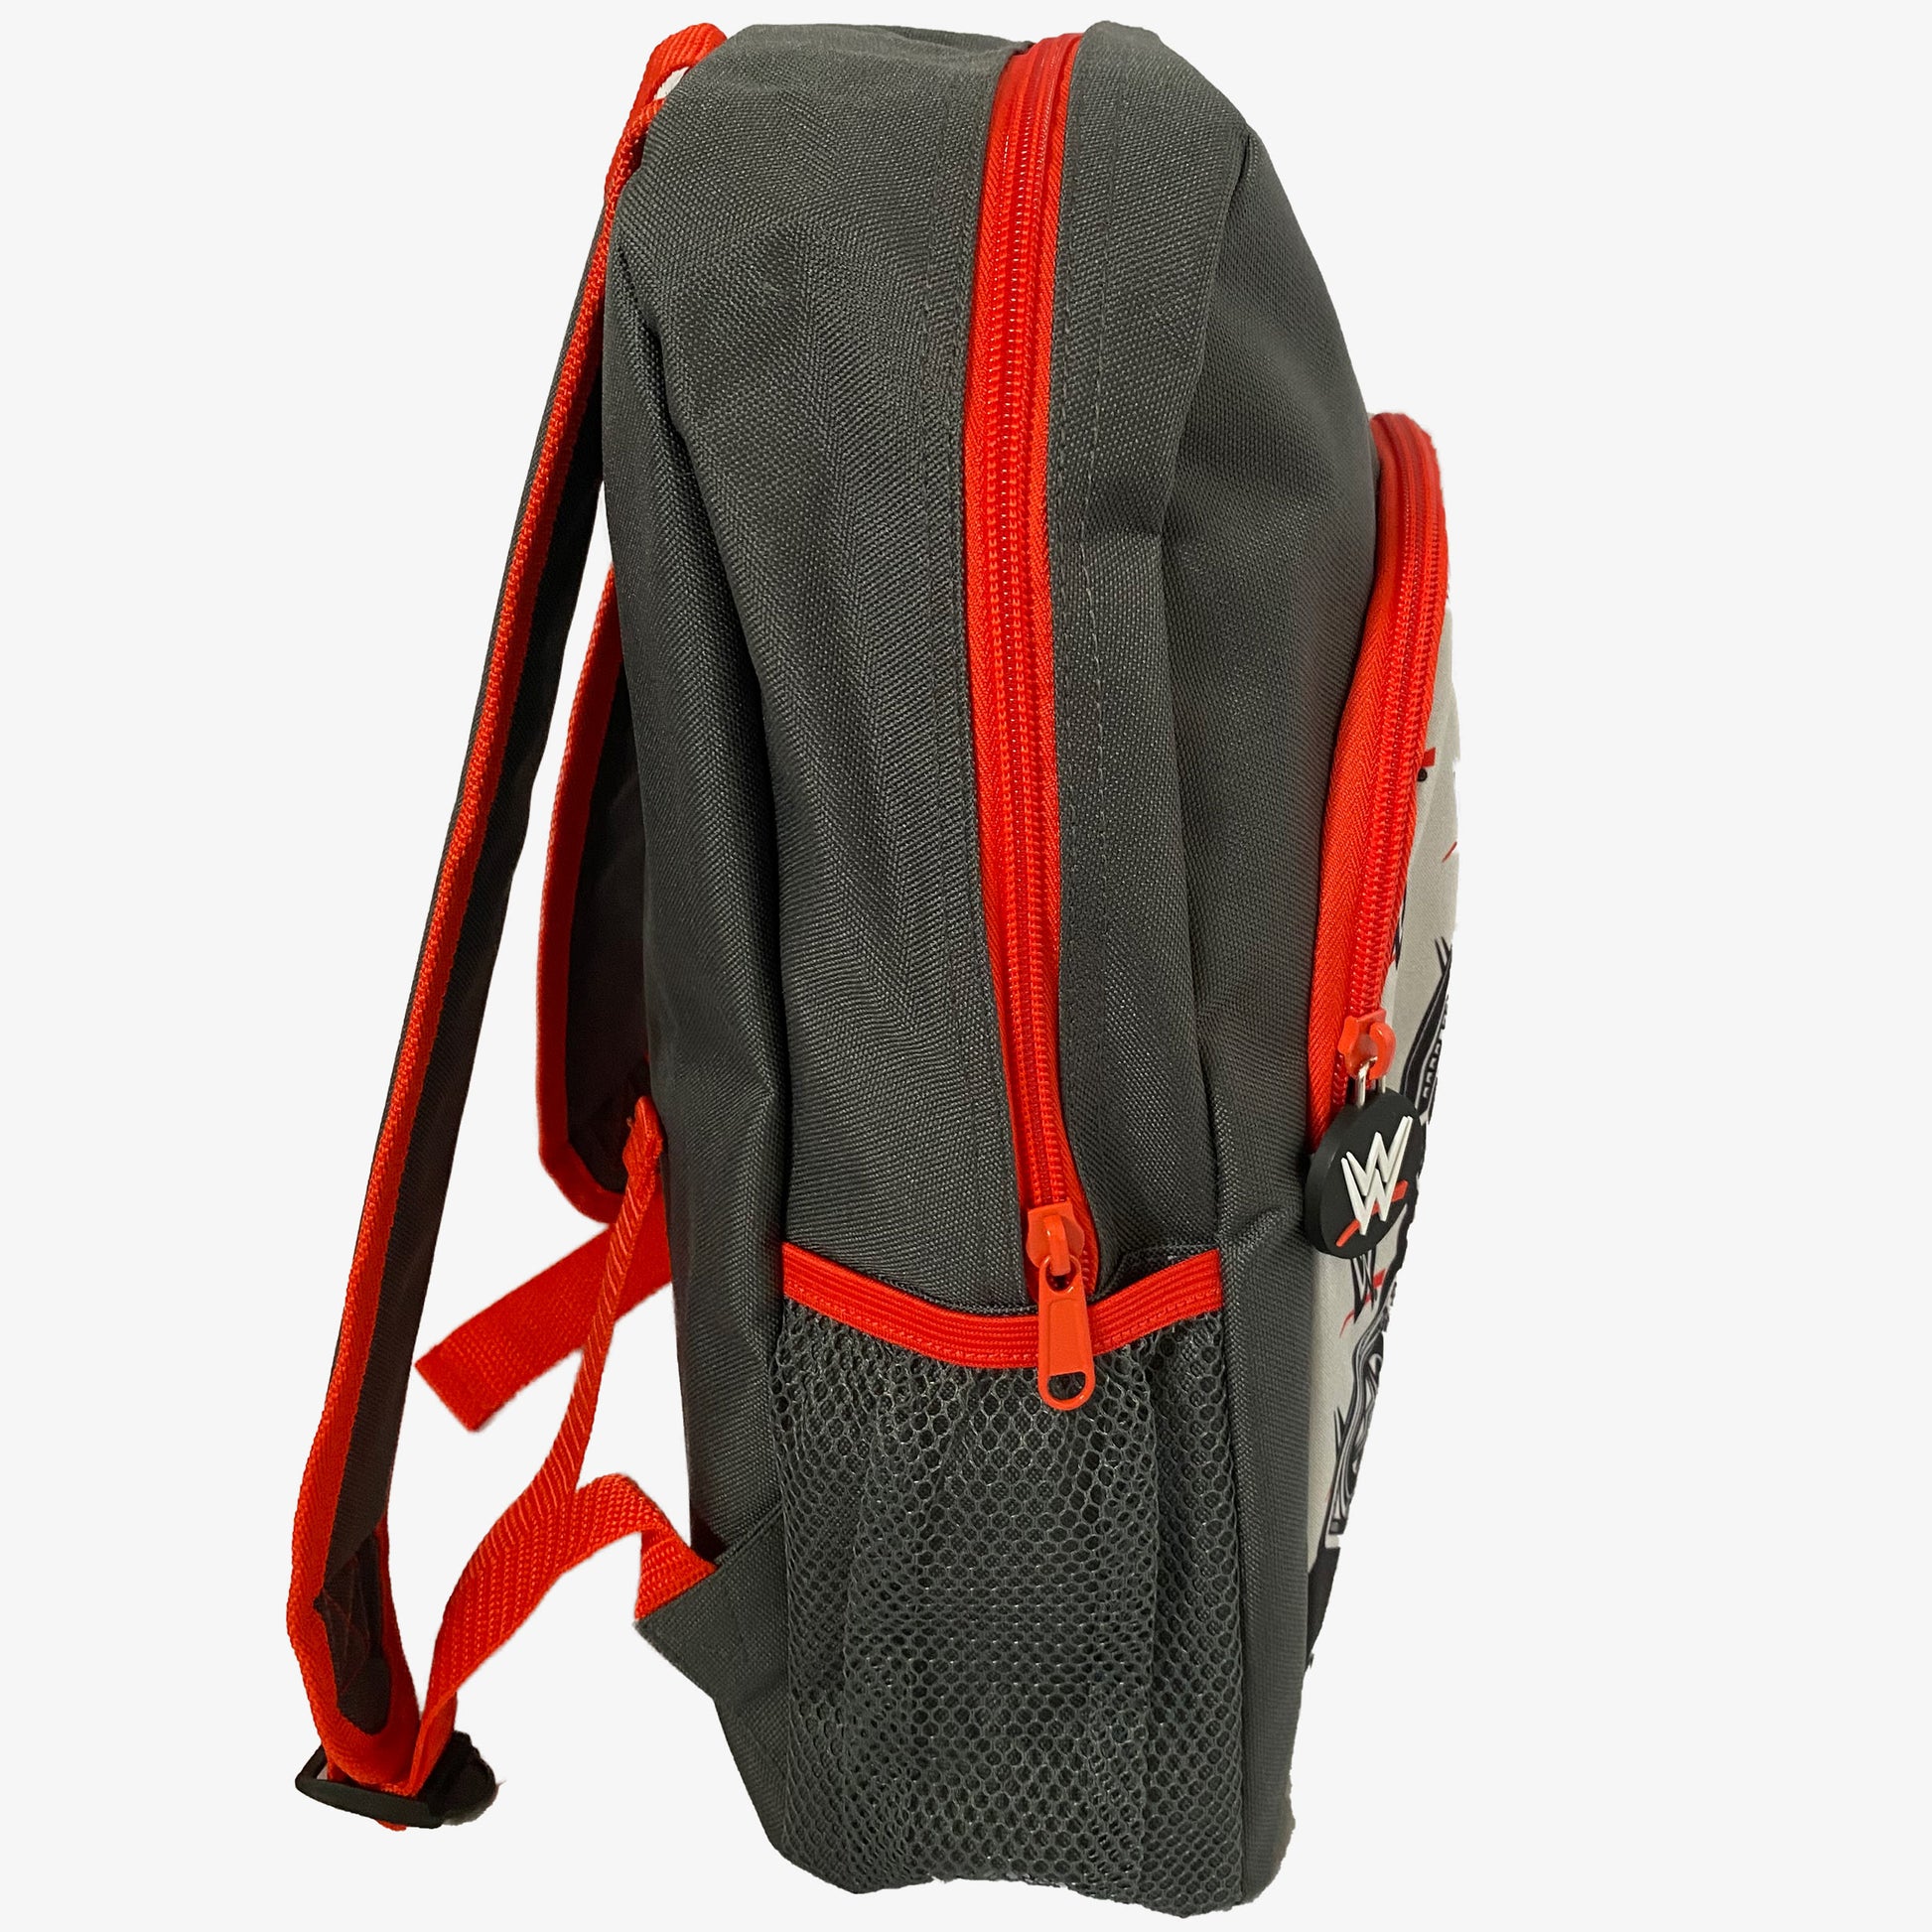 Shop Wwe Backpacks for Sale